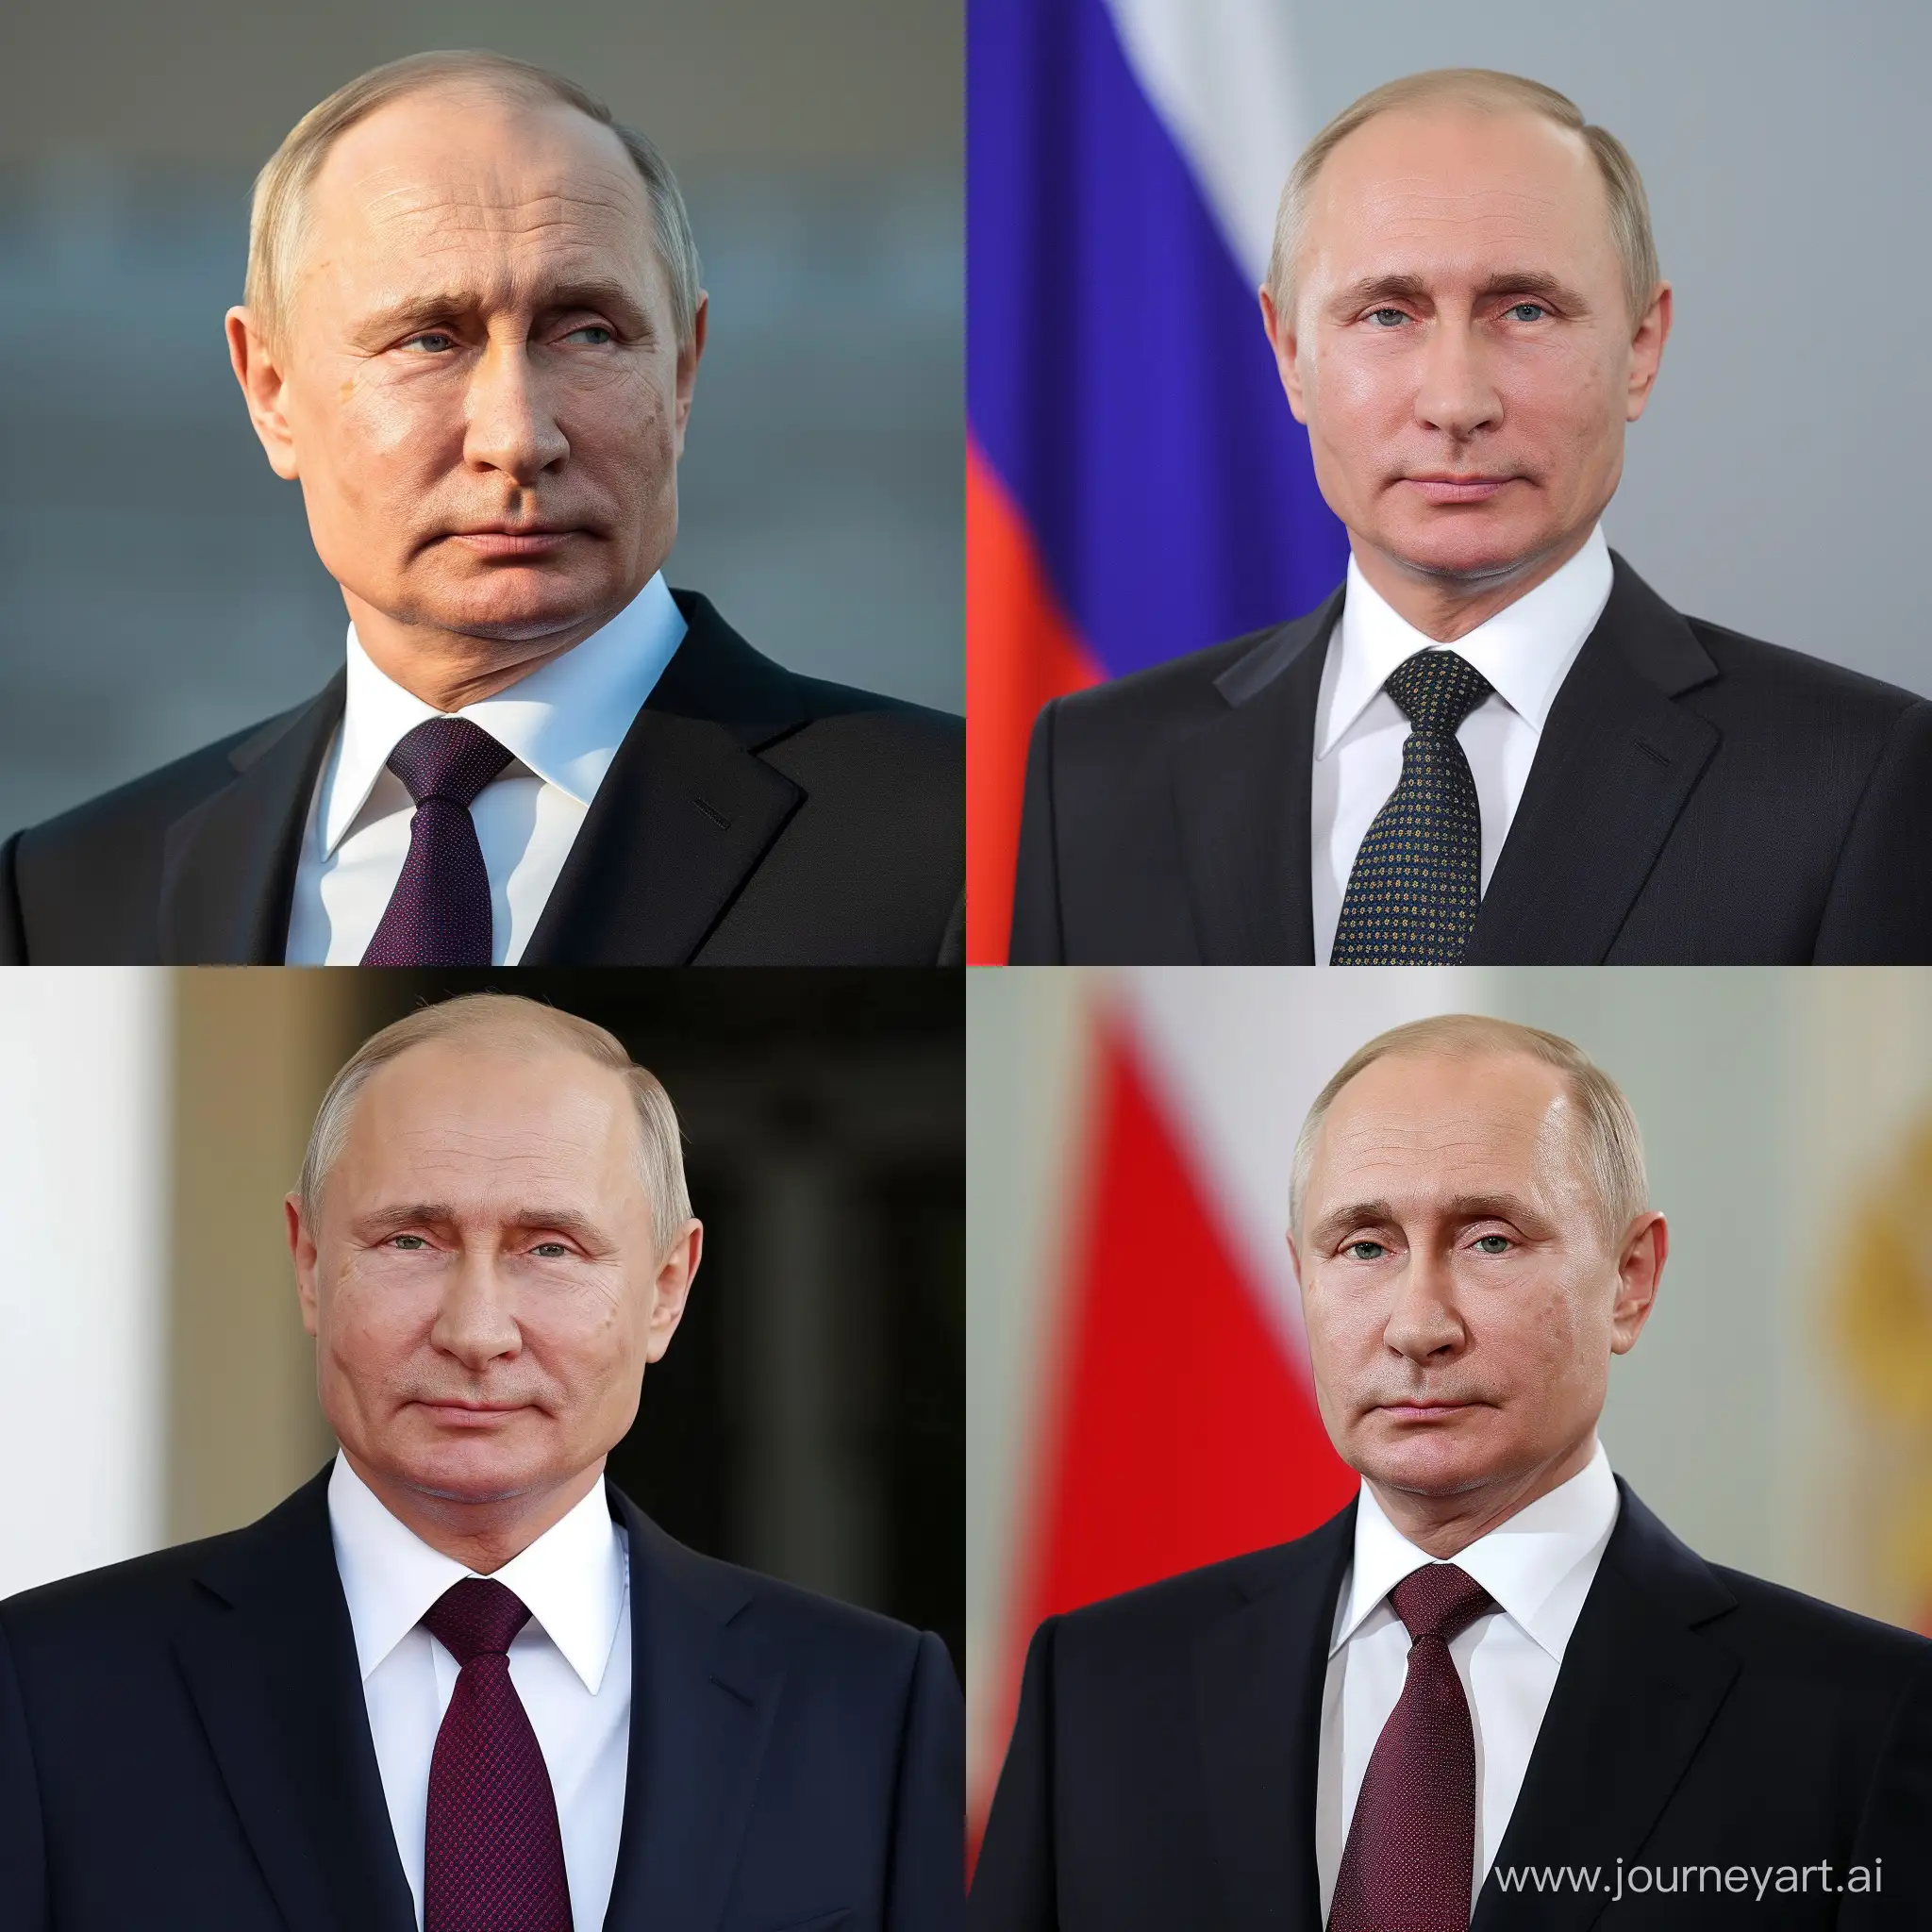 Vladimir-Putin-Portrait-with-Striking-Visual-Effects